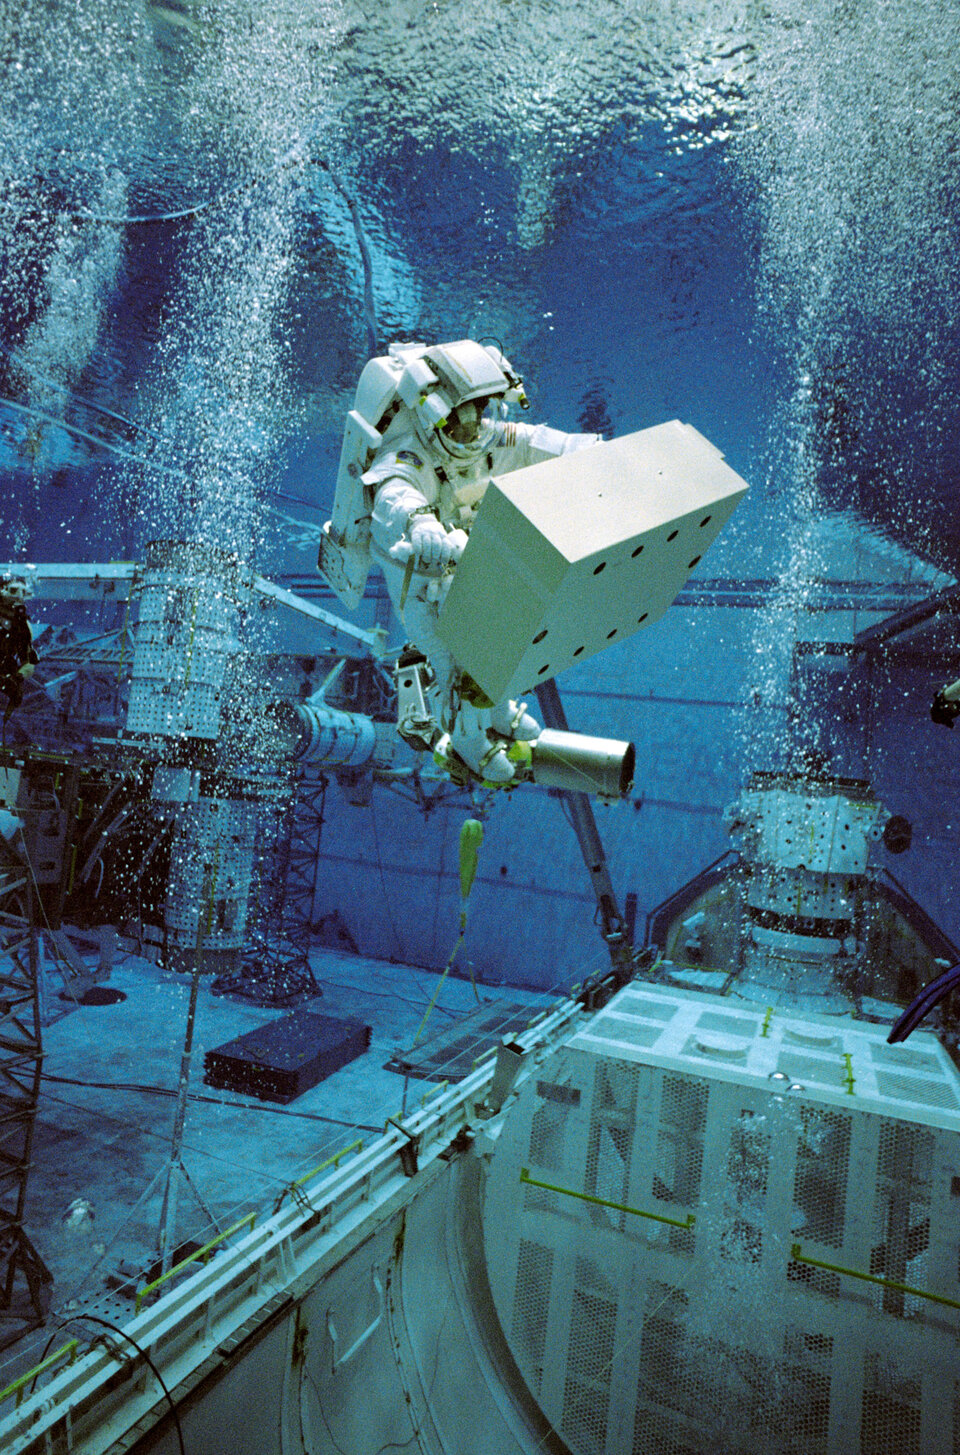 Underwater simulation of extravehicular activity (EVA)